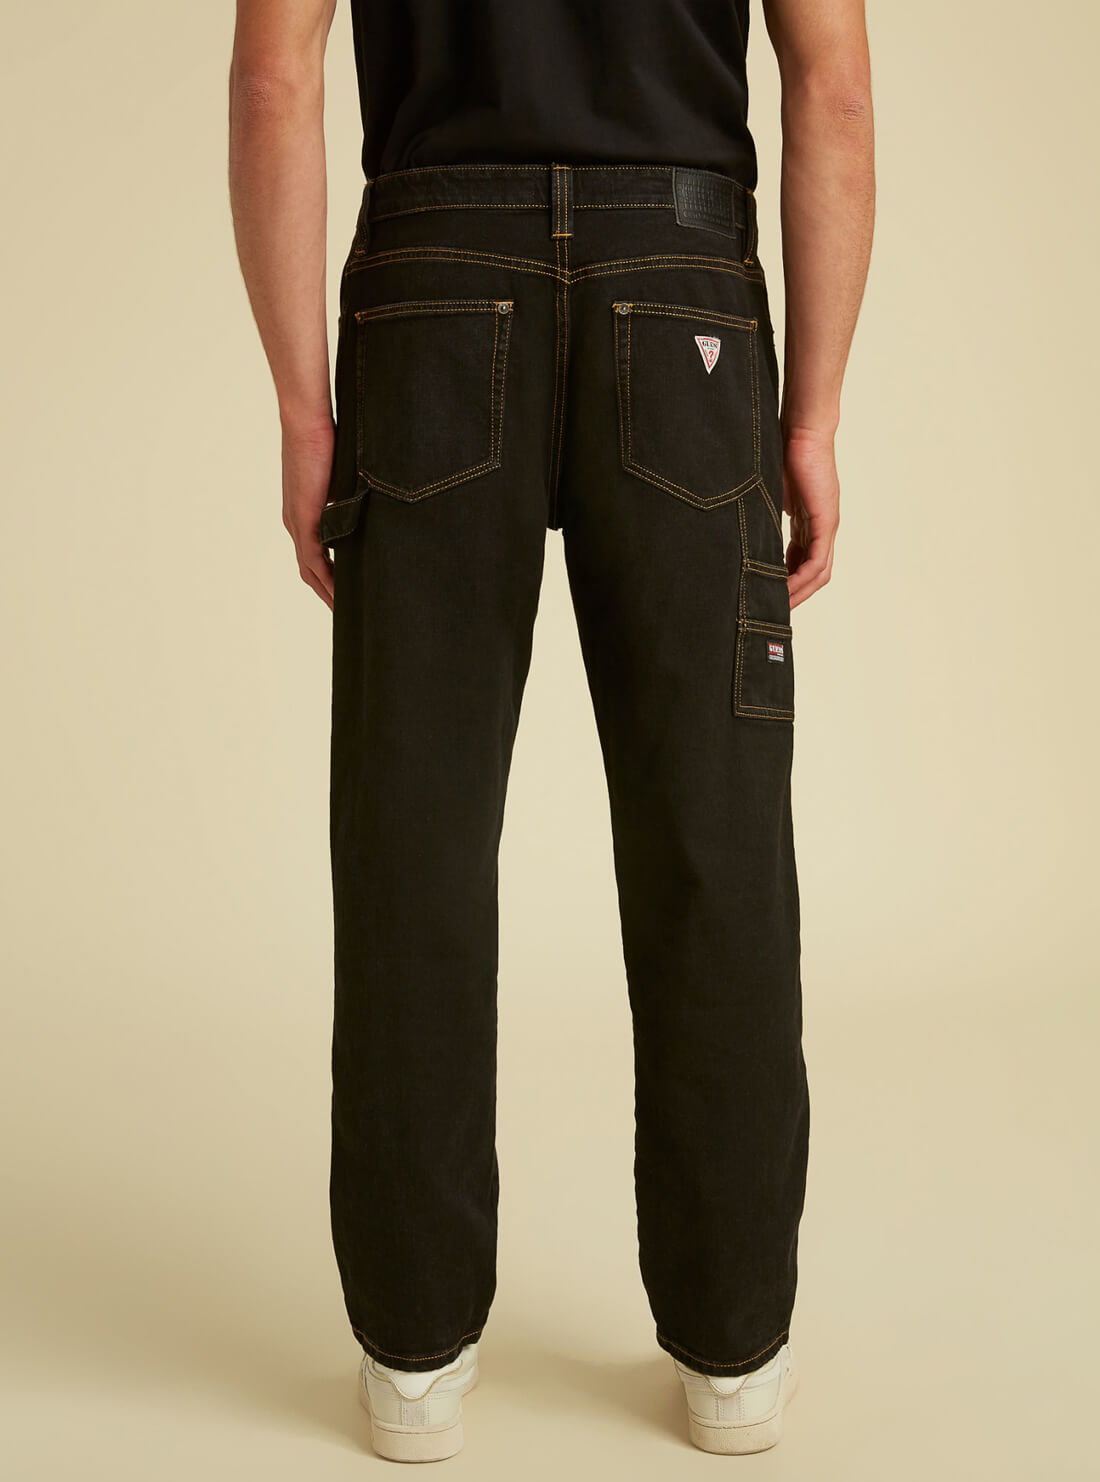 GUESS Mens GUESS Originals Straight Fit Carpenter Denim Jeans in Vintage Black Wash  M1GA06R4AS0 Model Back View